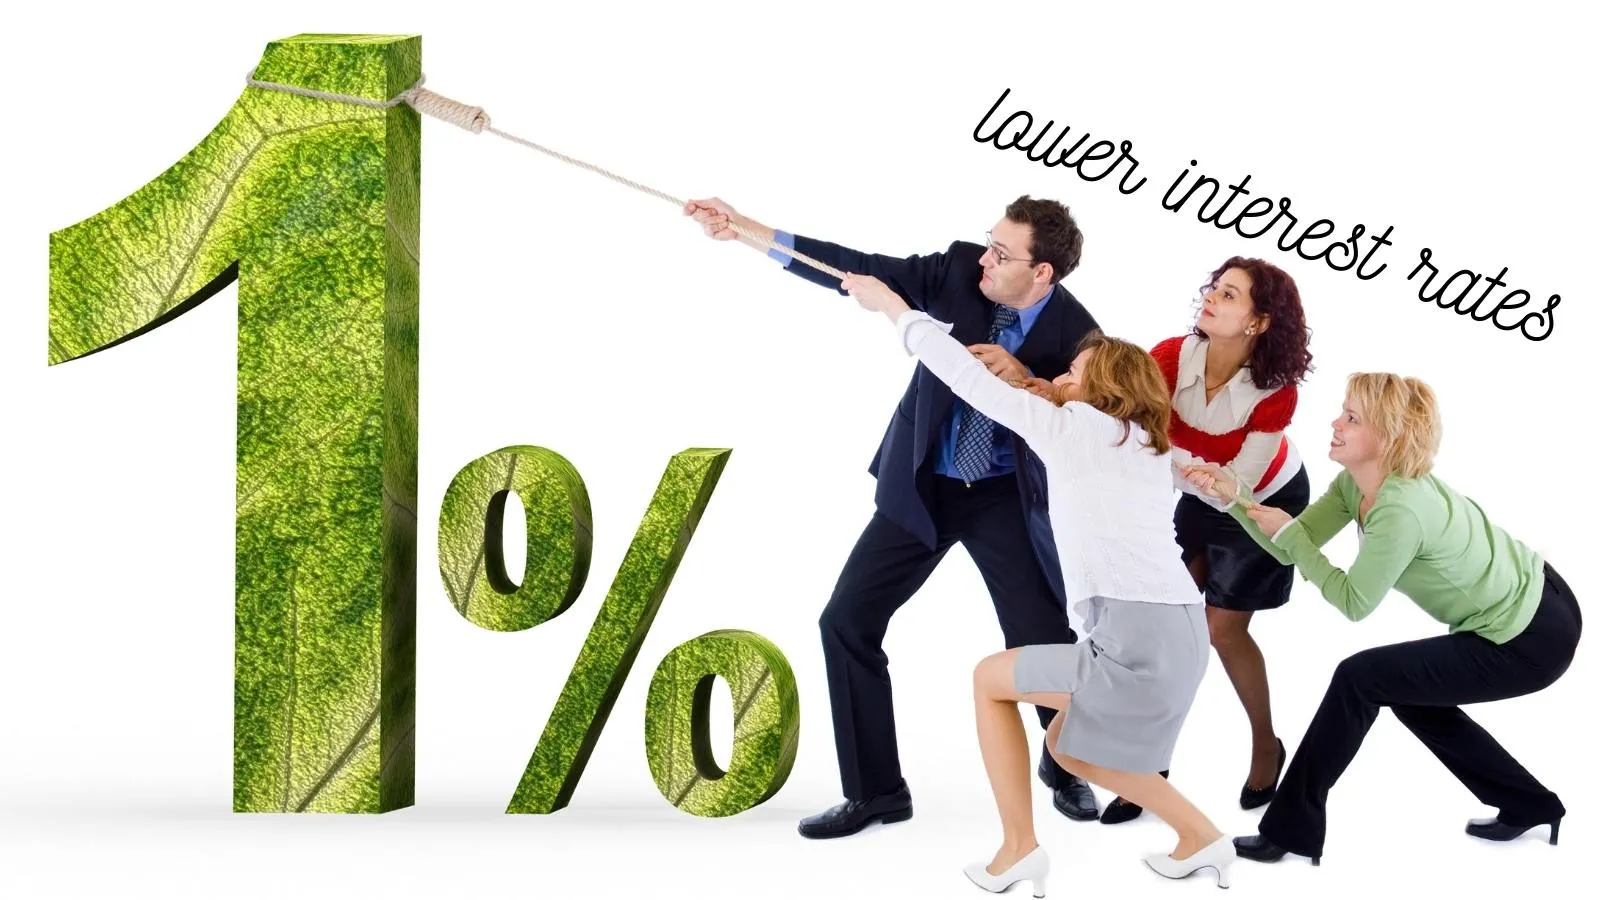 lower interest rates